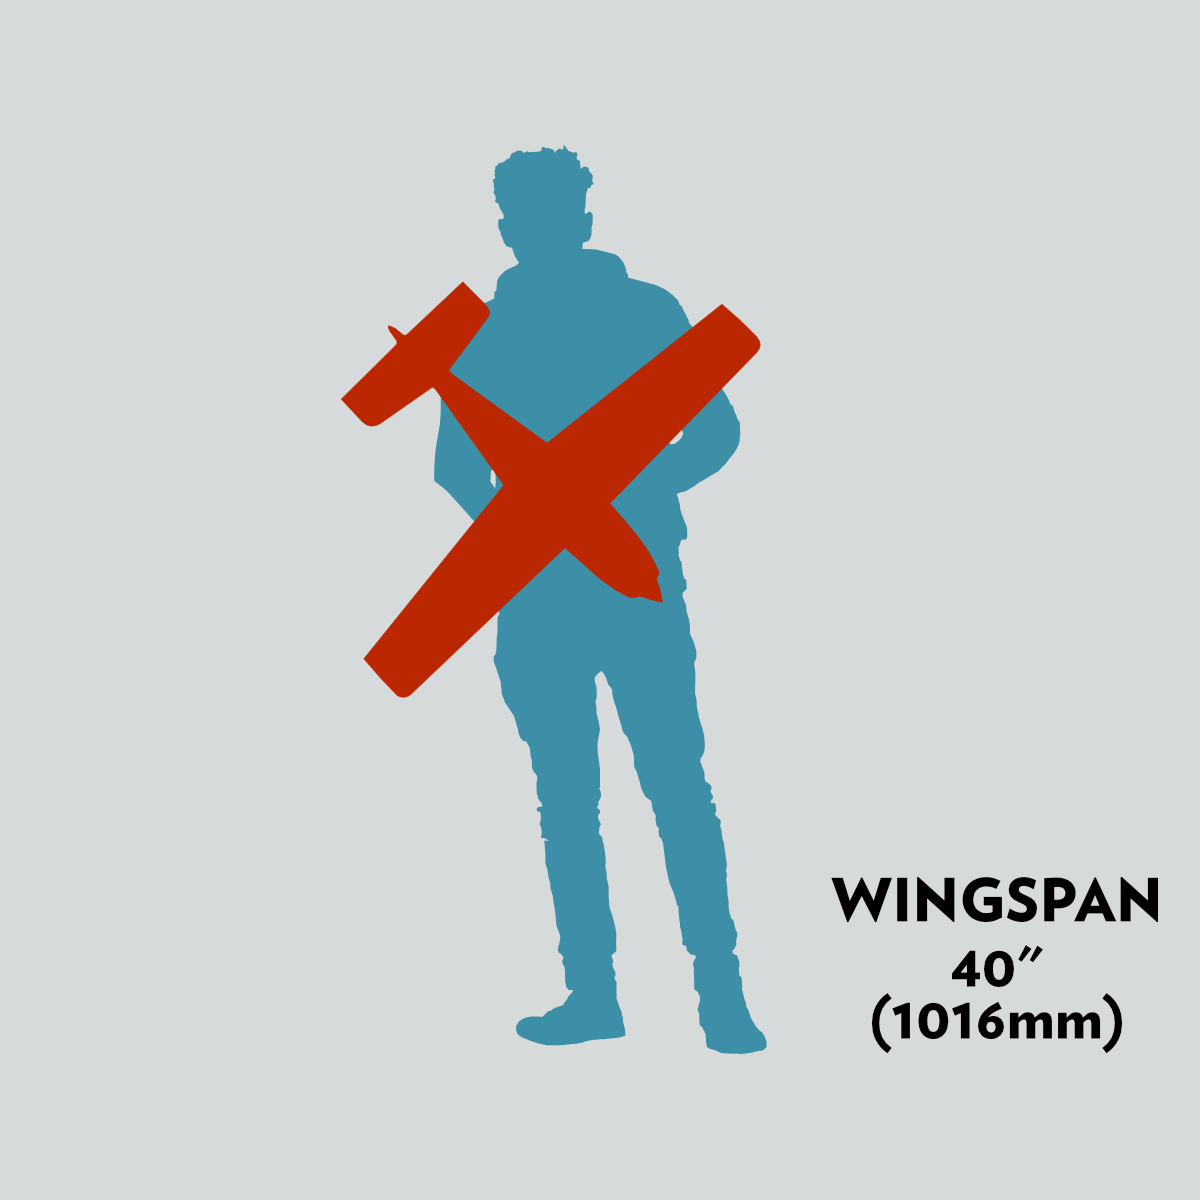 40” (1016mm) wingspan